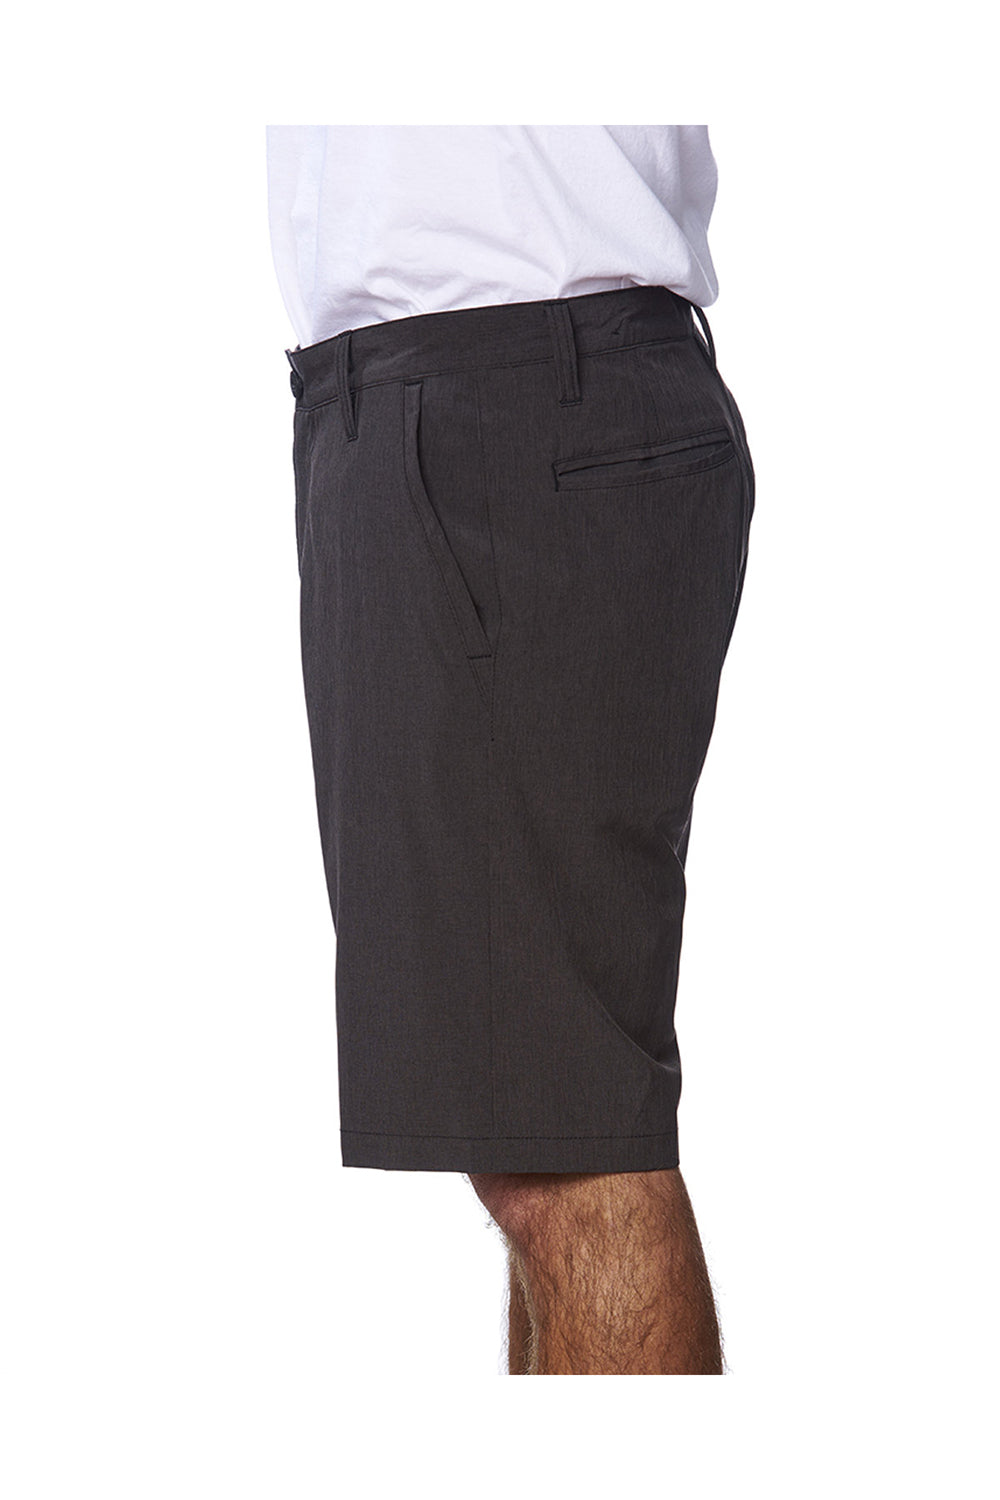 Burnside 9820 Mens Hybrid Stretch Shorts w/ Pockets Heather Black Model Side